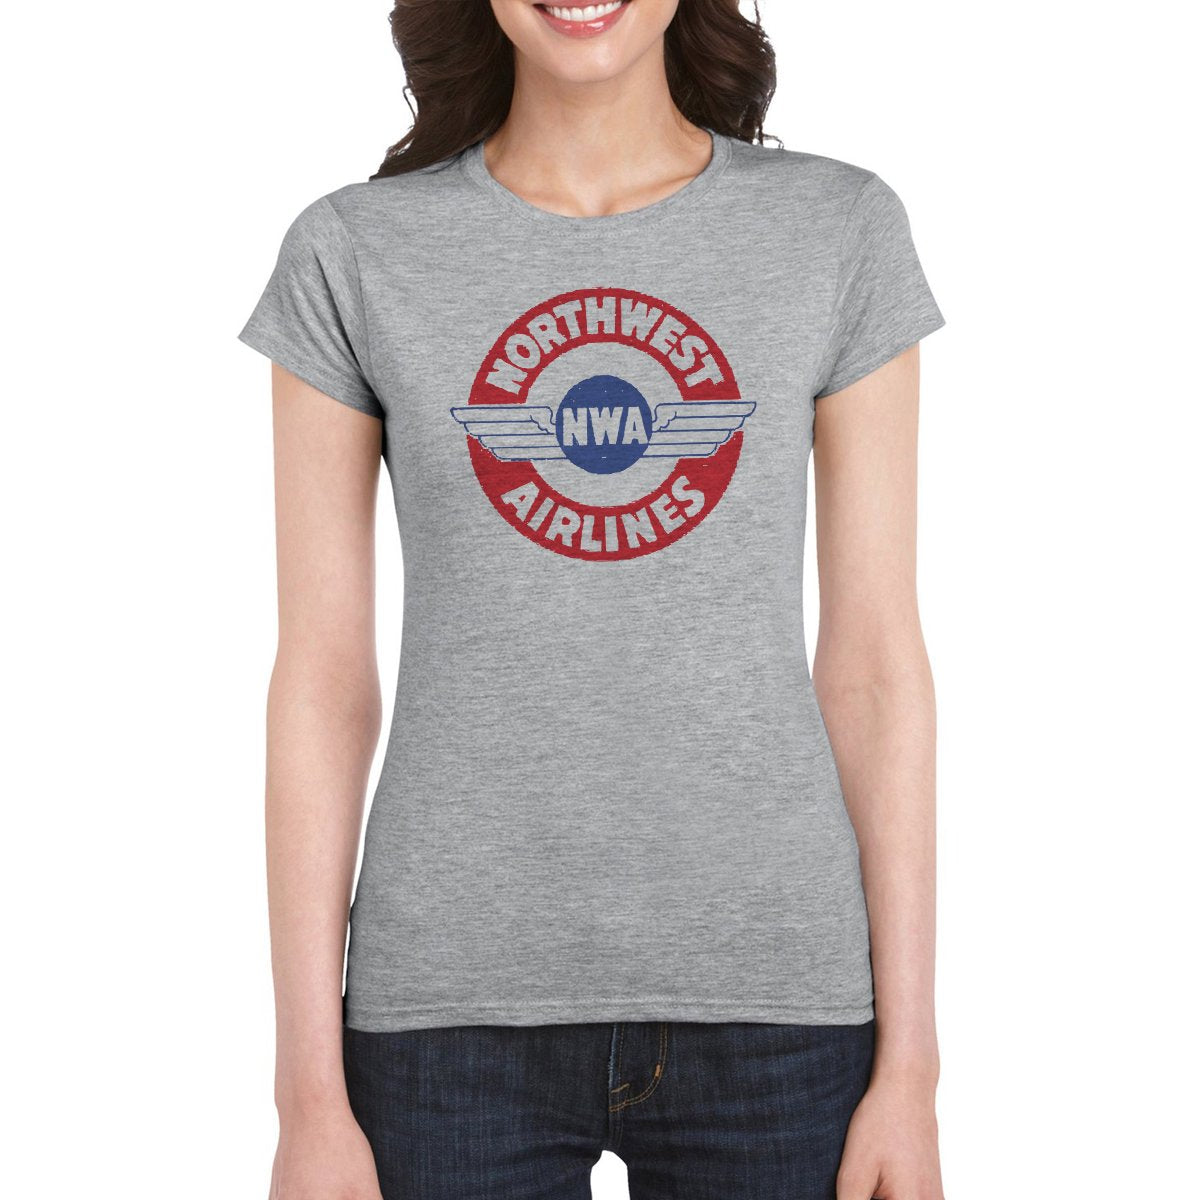 NORTHWEST AIRLINES LOGO Women's T-Shirt